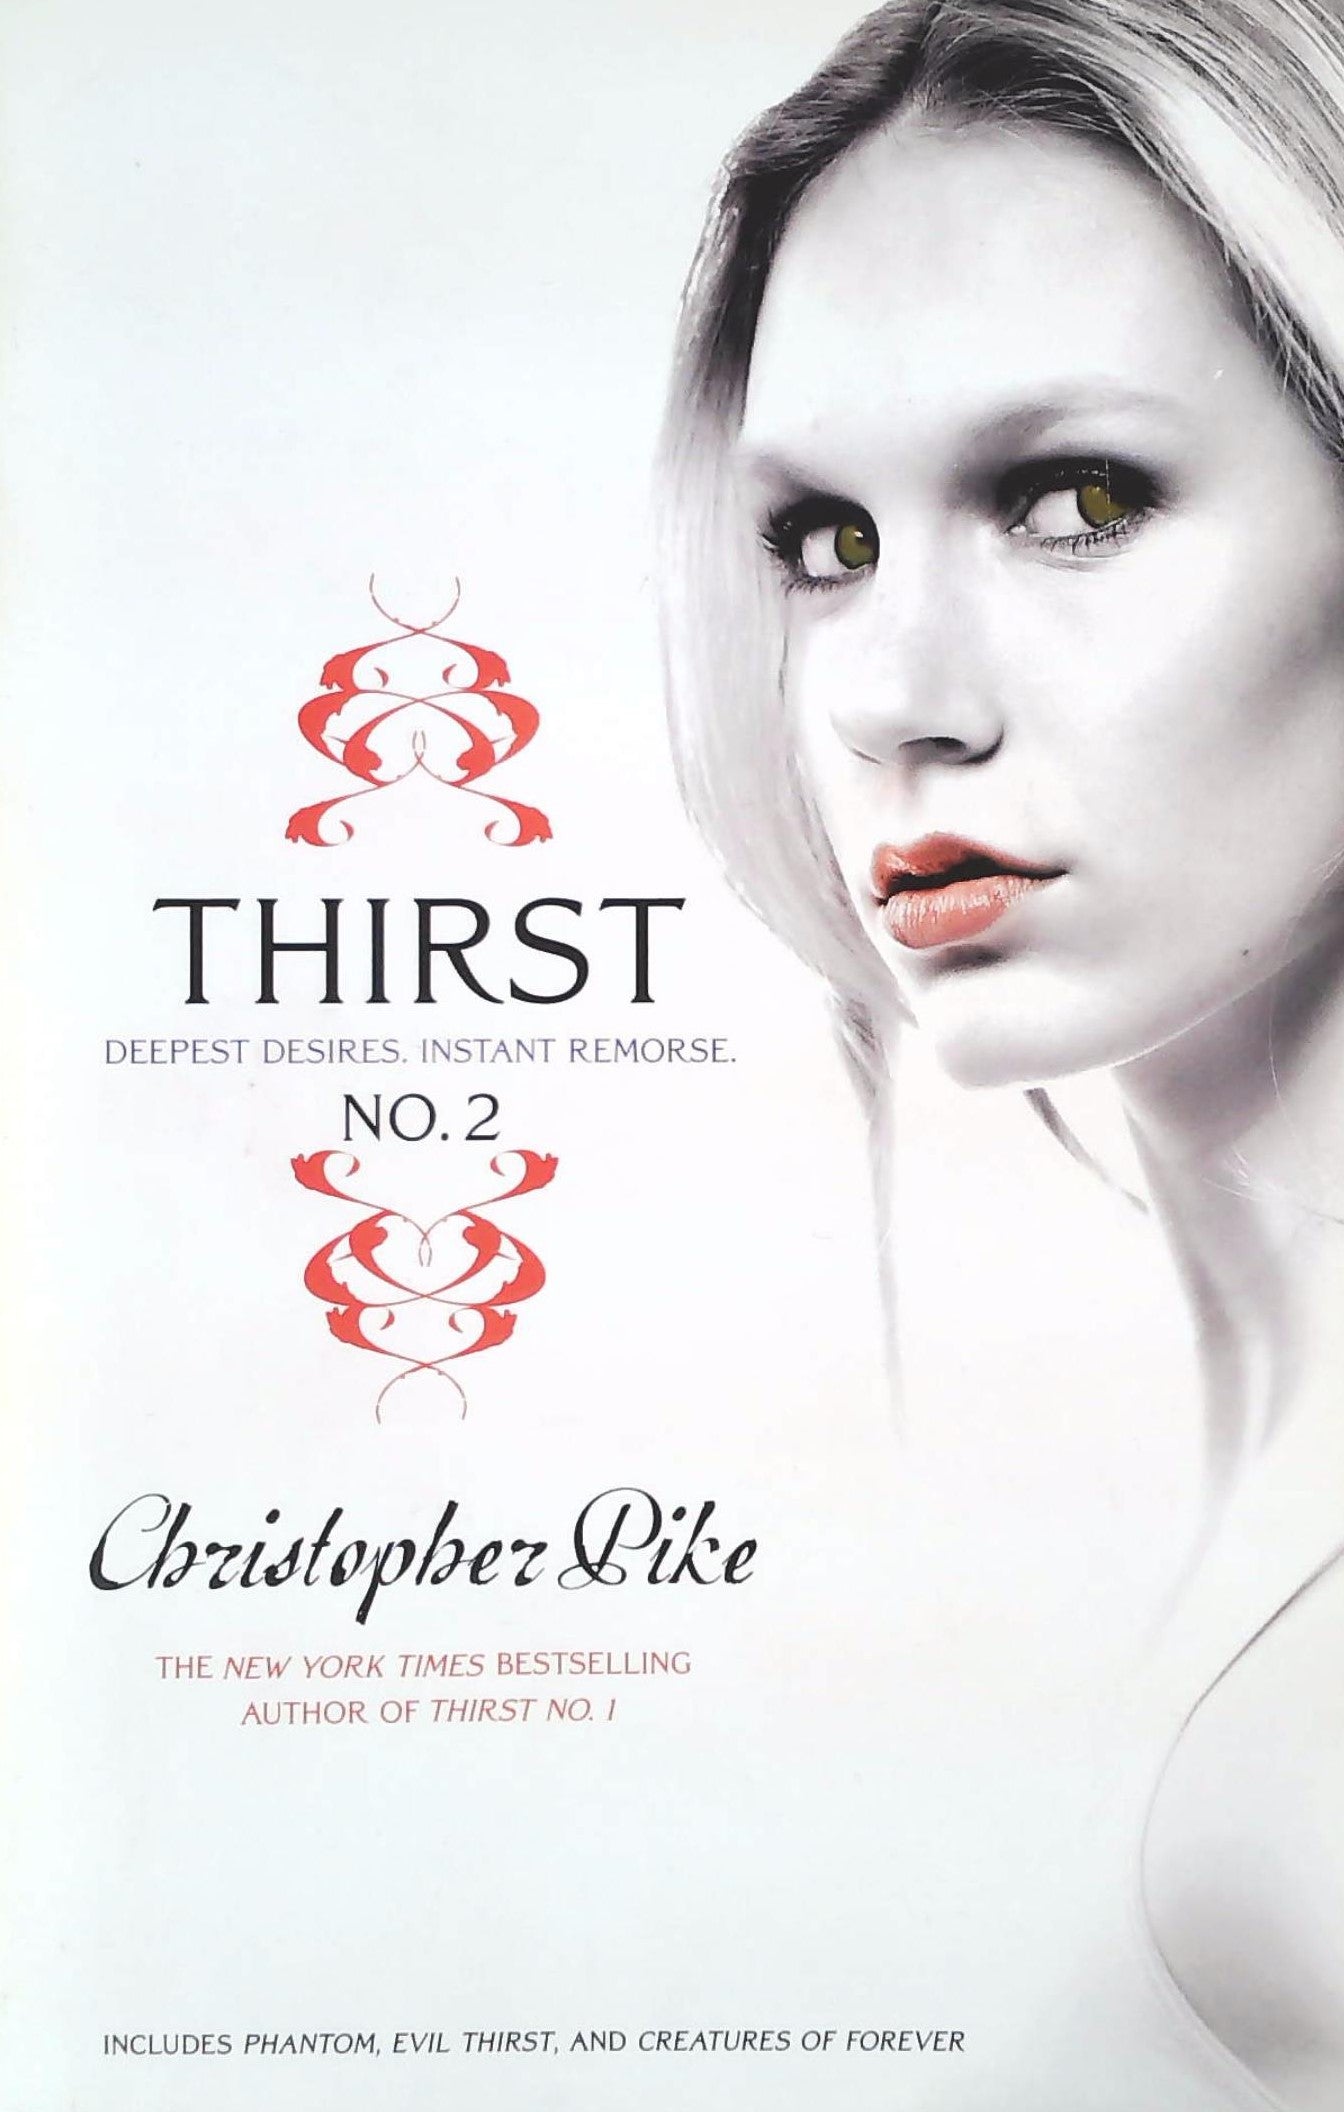 Livre ISBN 1416983090 Thirst # 2 : Deepest Desires. Instant Remorse. (Christopher Pike)